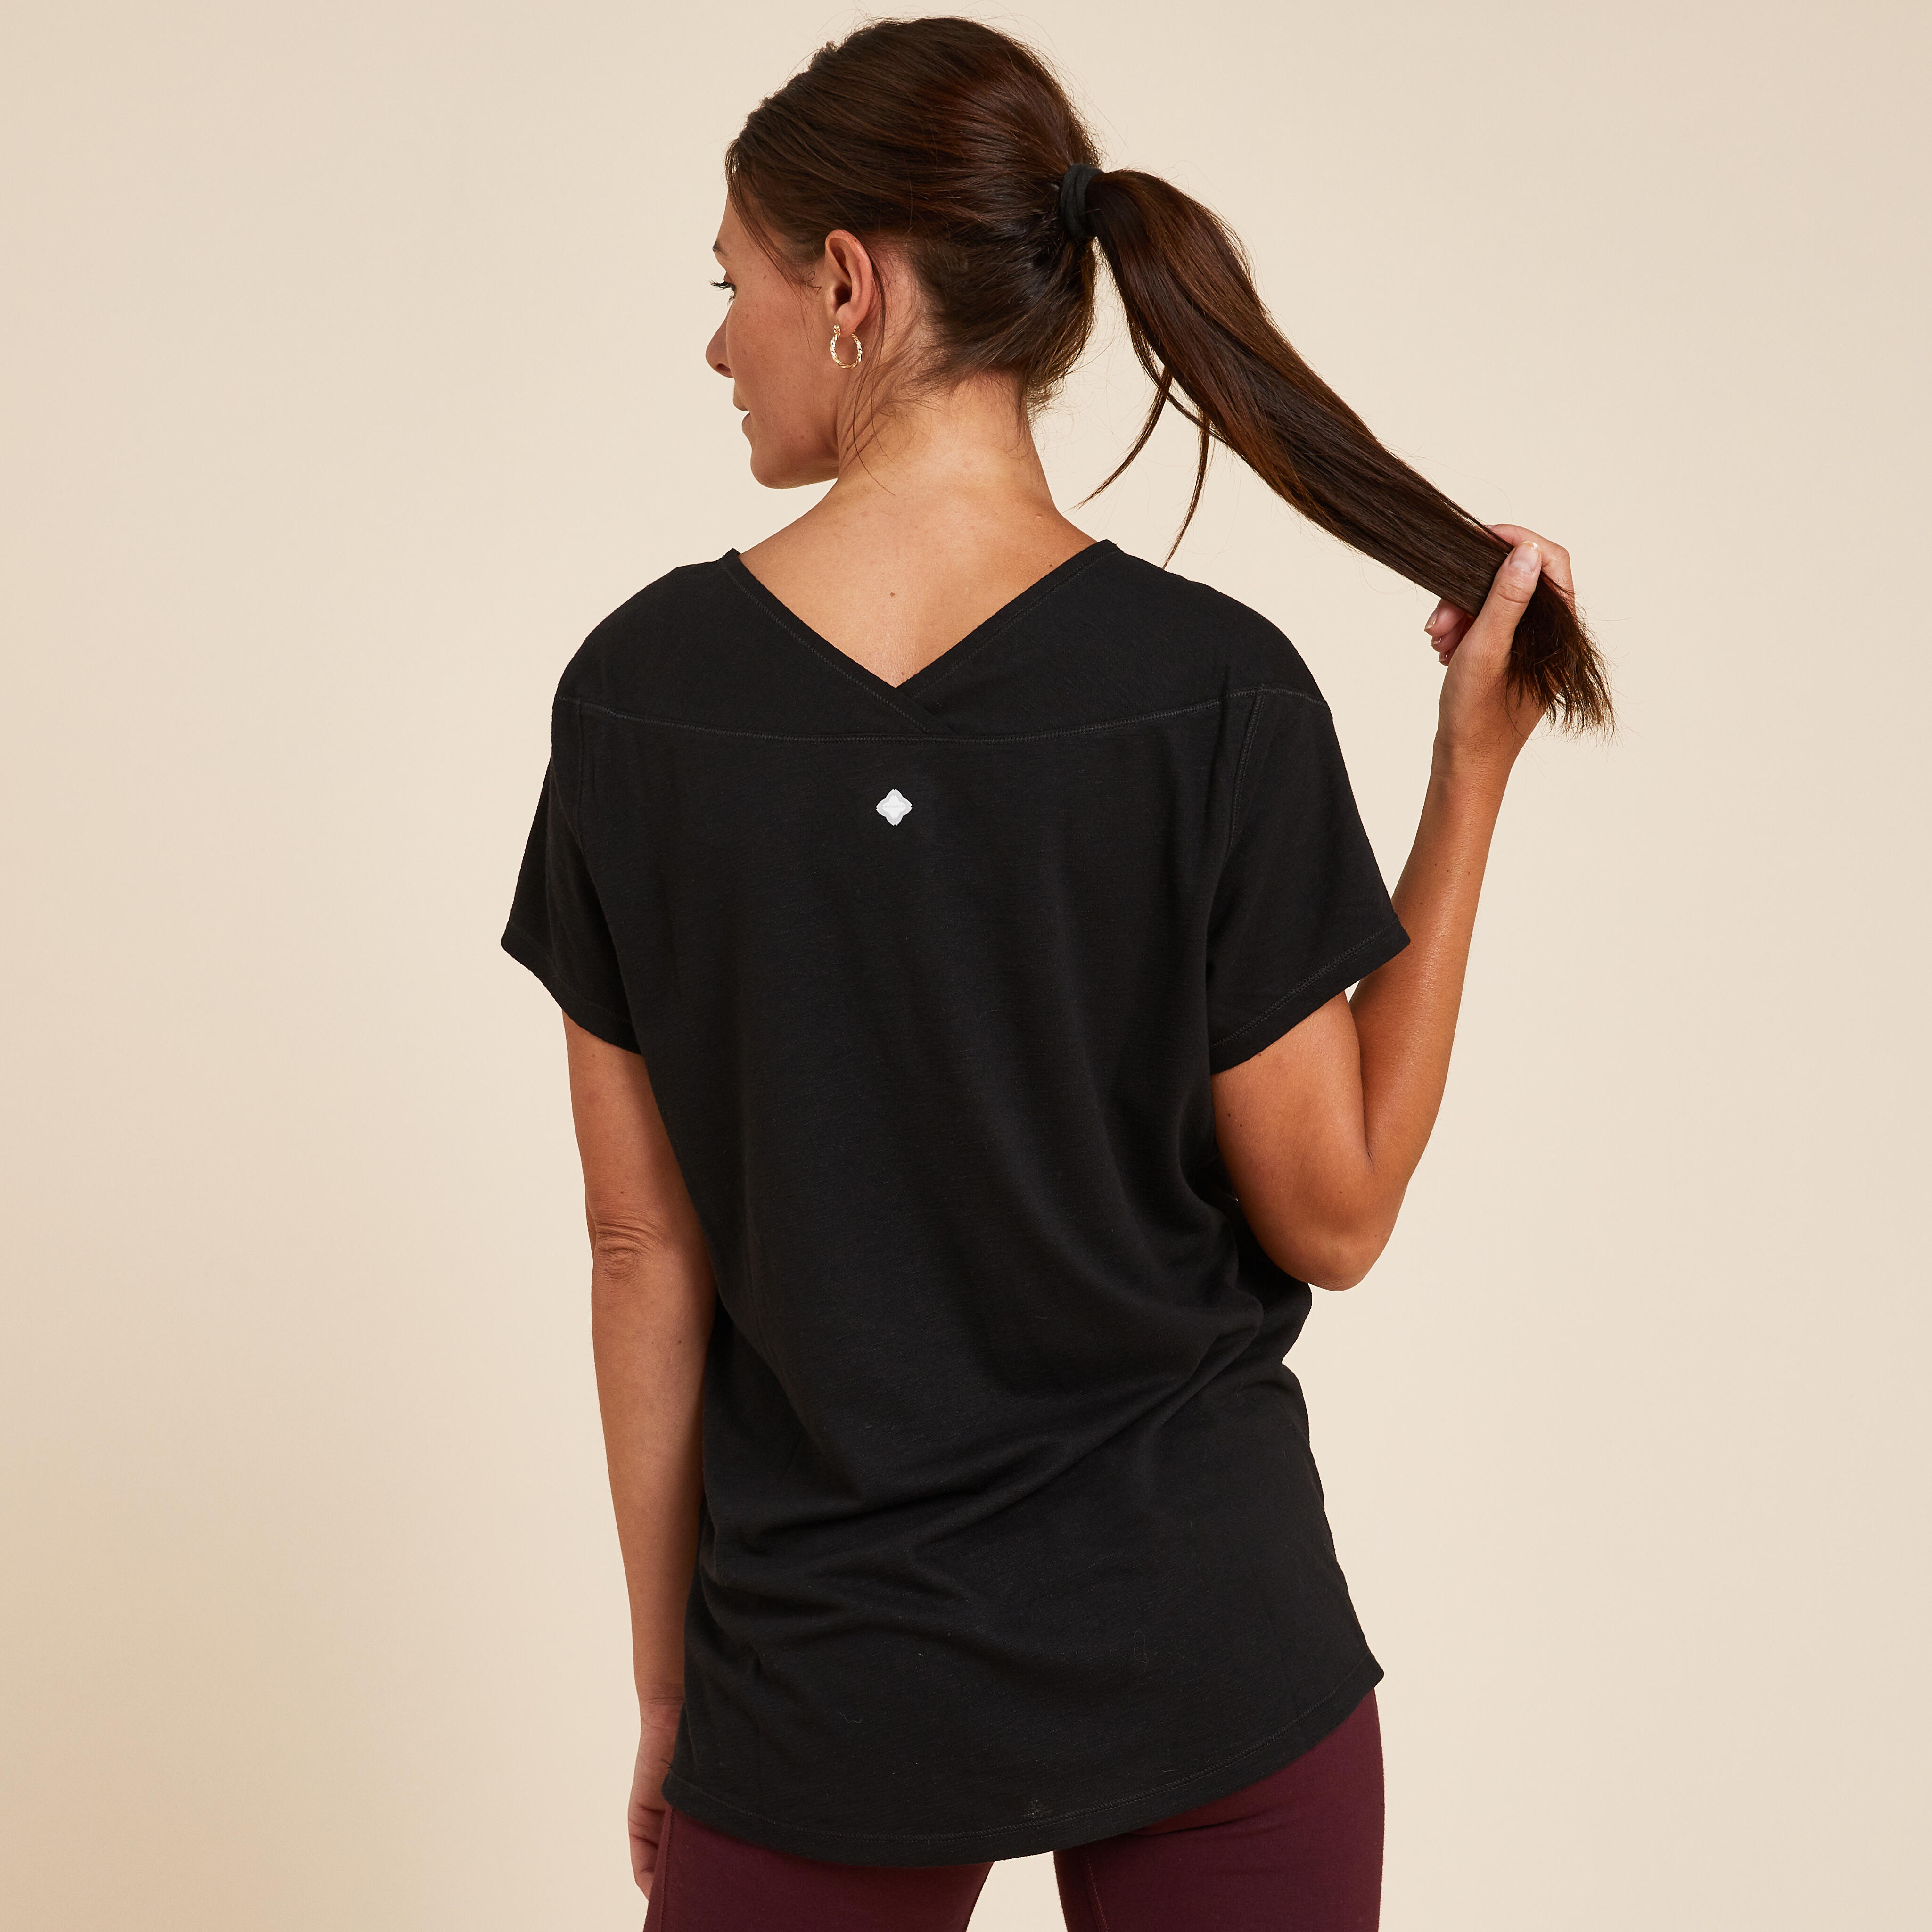 Image of Women’s Yoga T-Shirt - Black